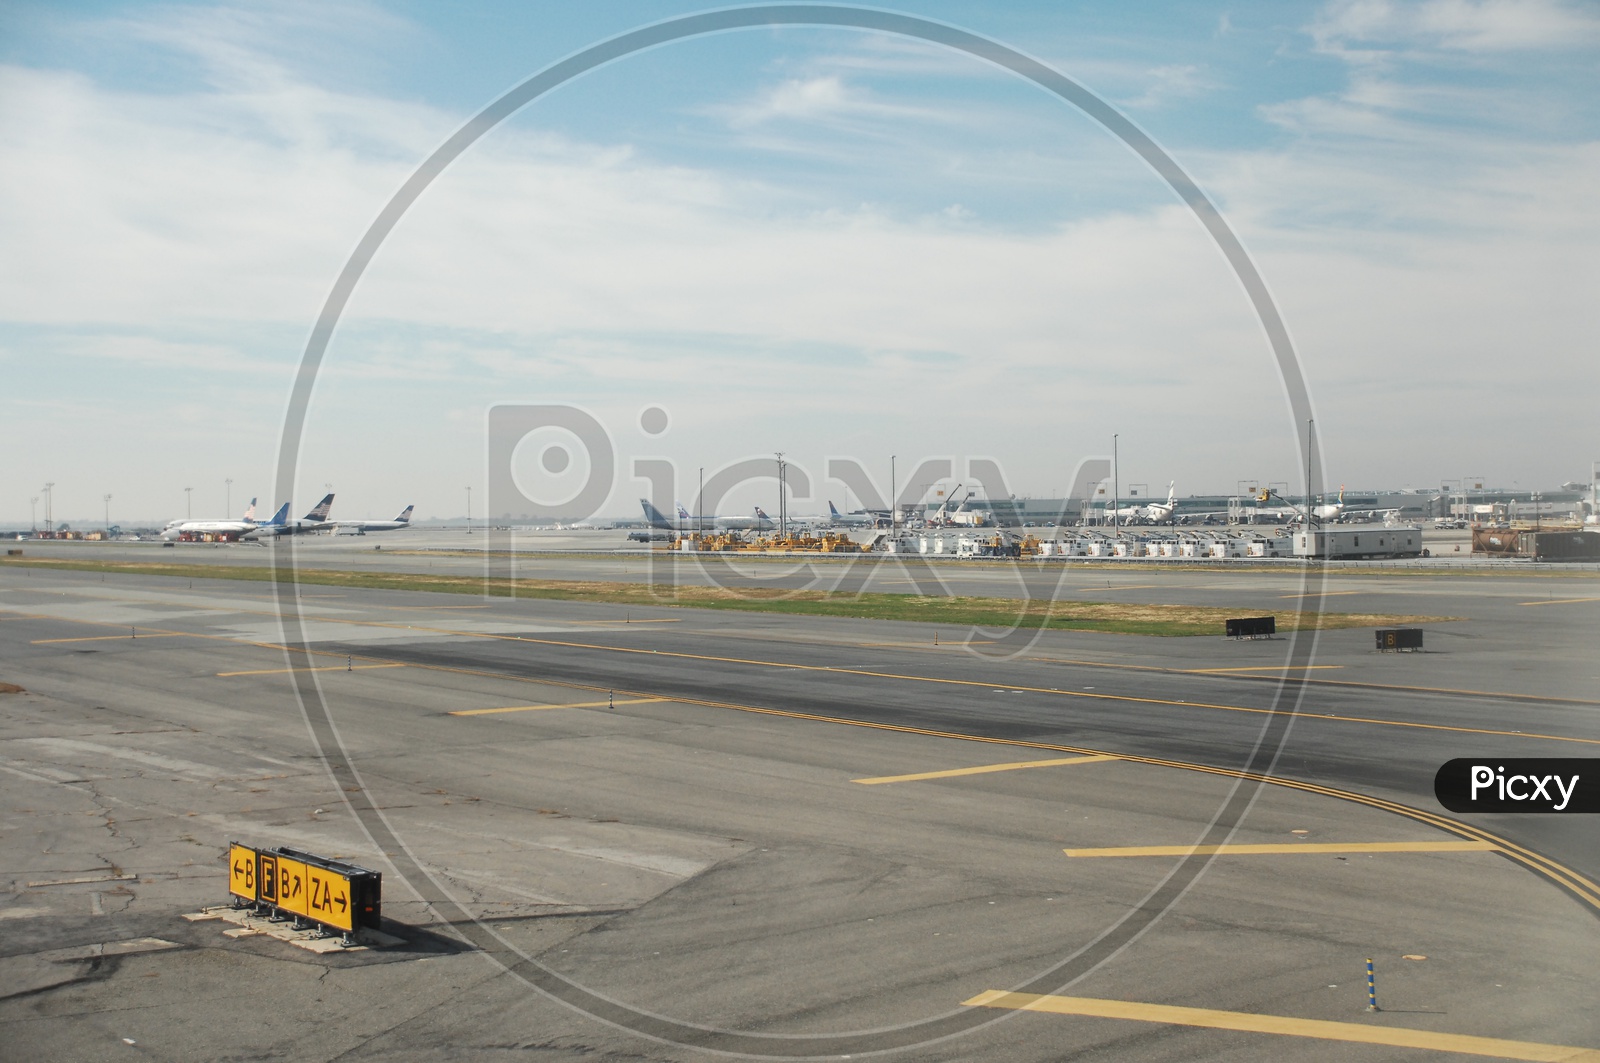 Flights waiting on runway captured from flight window